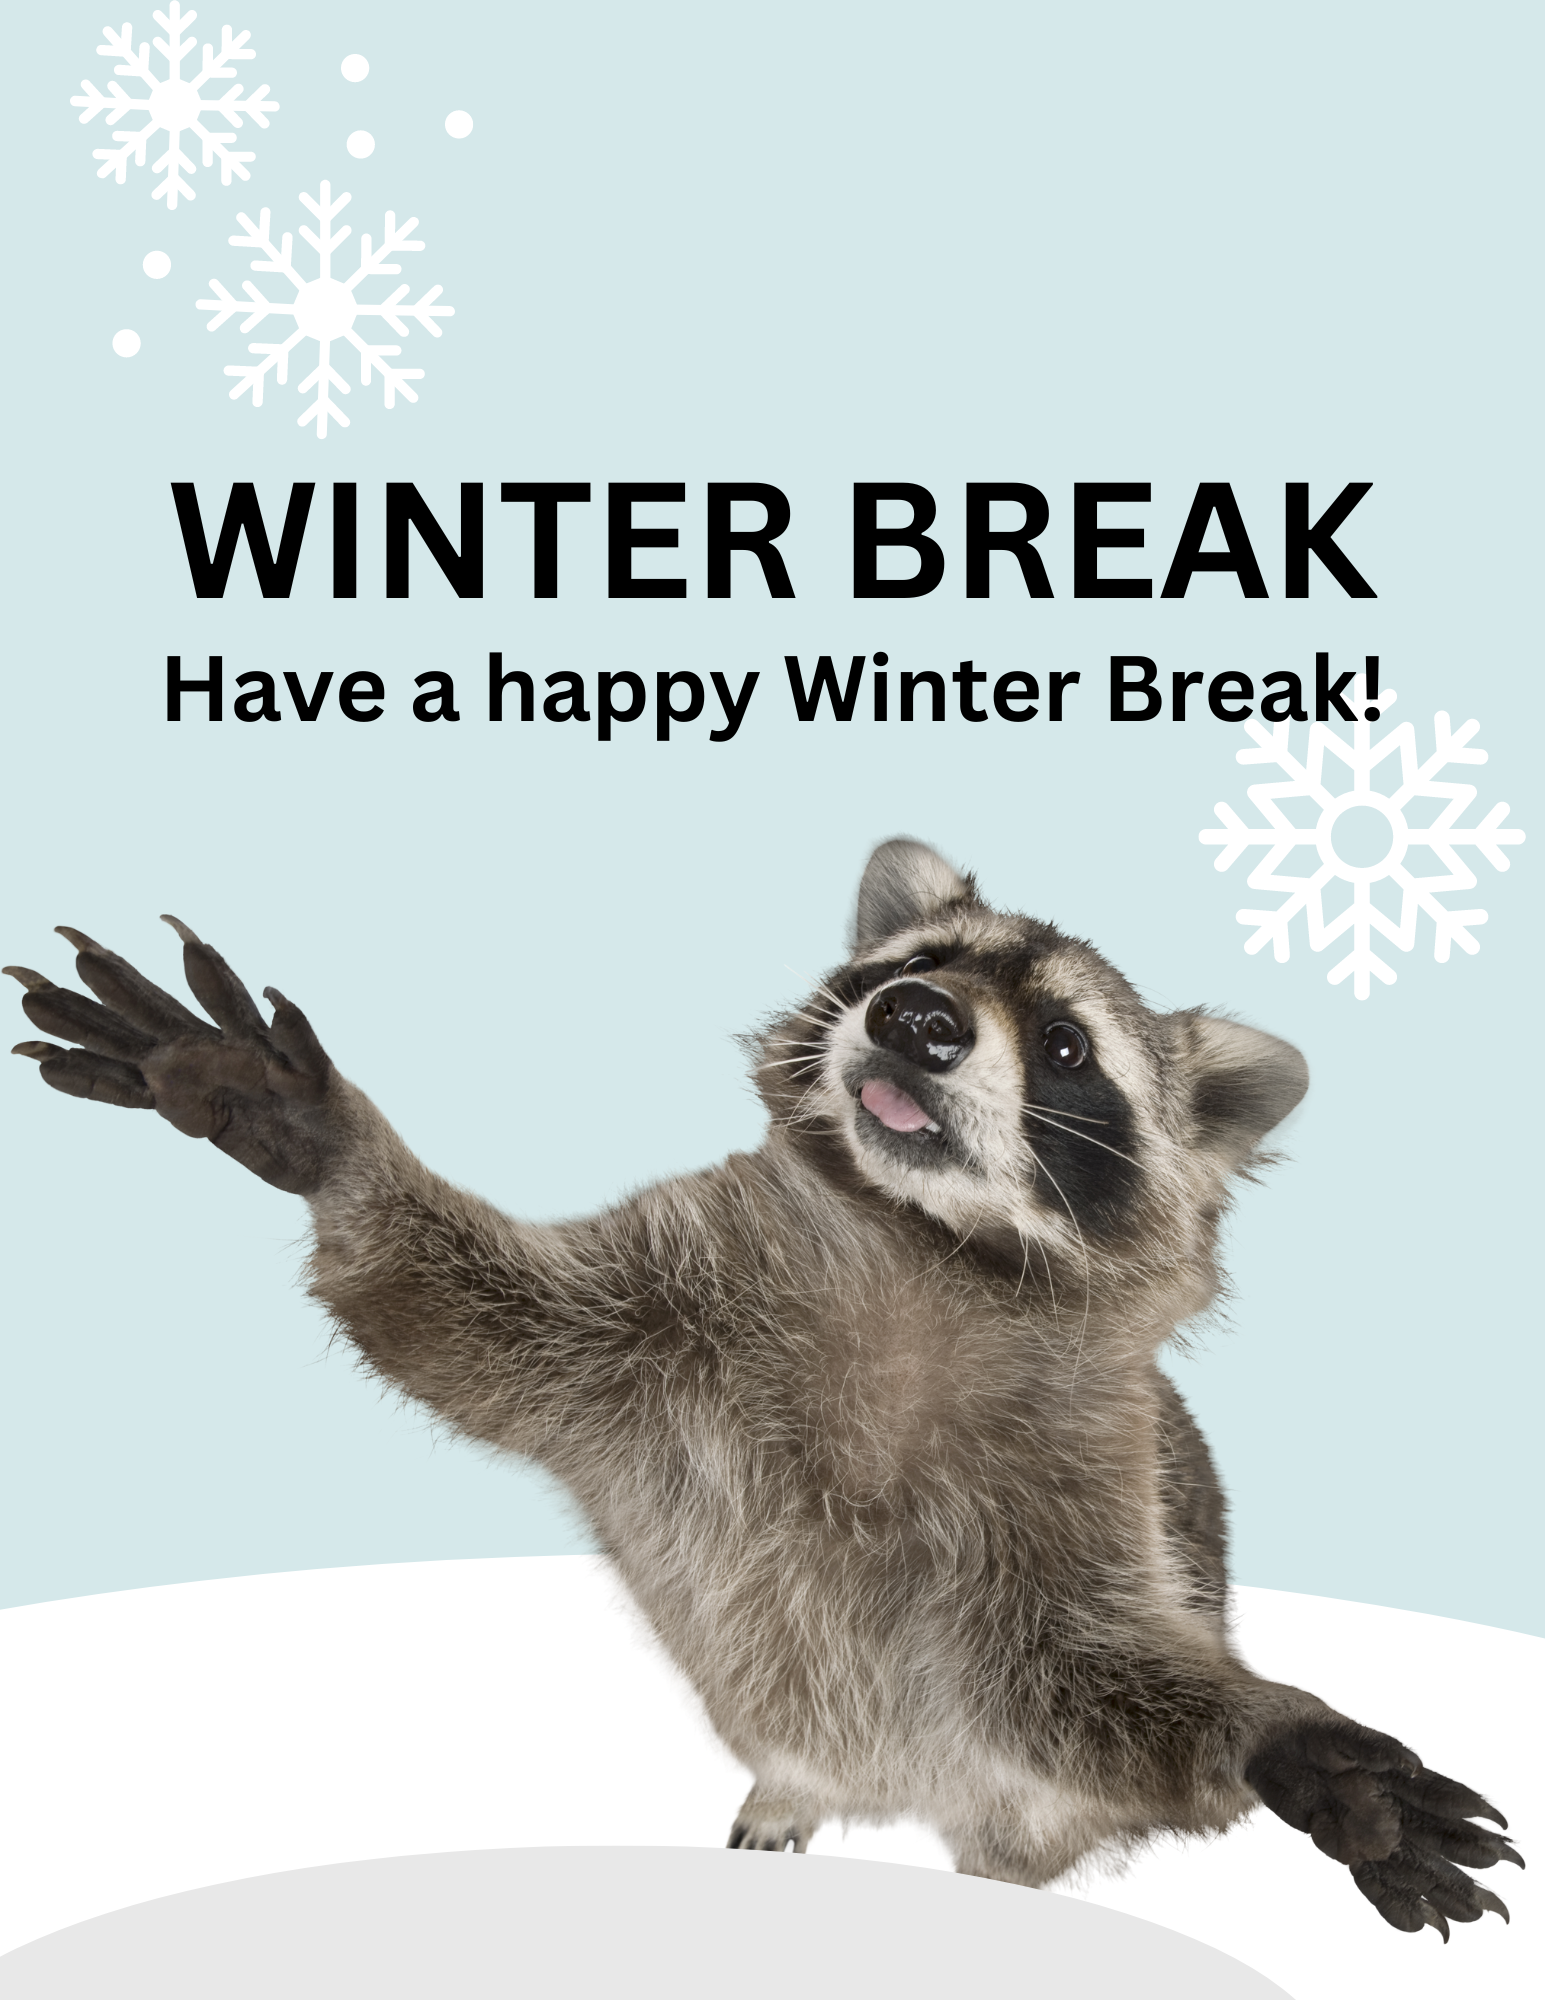 It's winter break! Happy holidays!